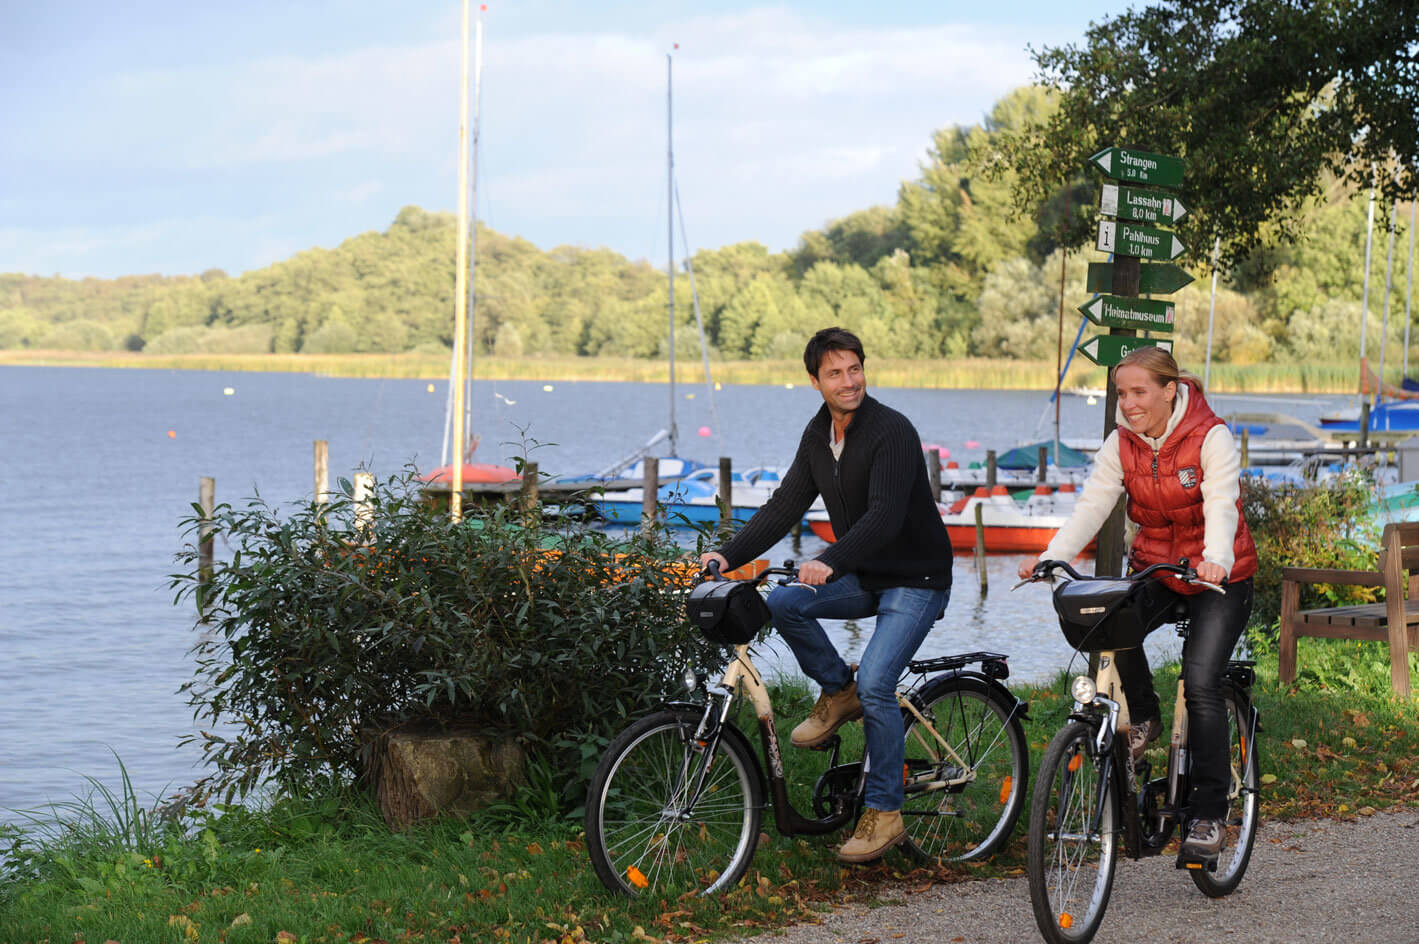 Foto: Radfahrer am Ufer des Schaalsees in Zarrentin. Fotoautor: ©TMV/foto@andreas-duerst.de